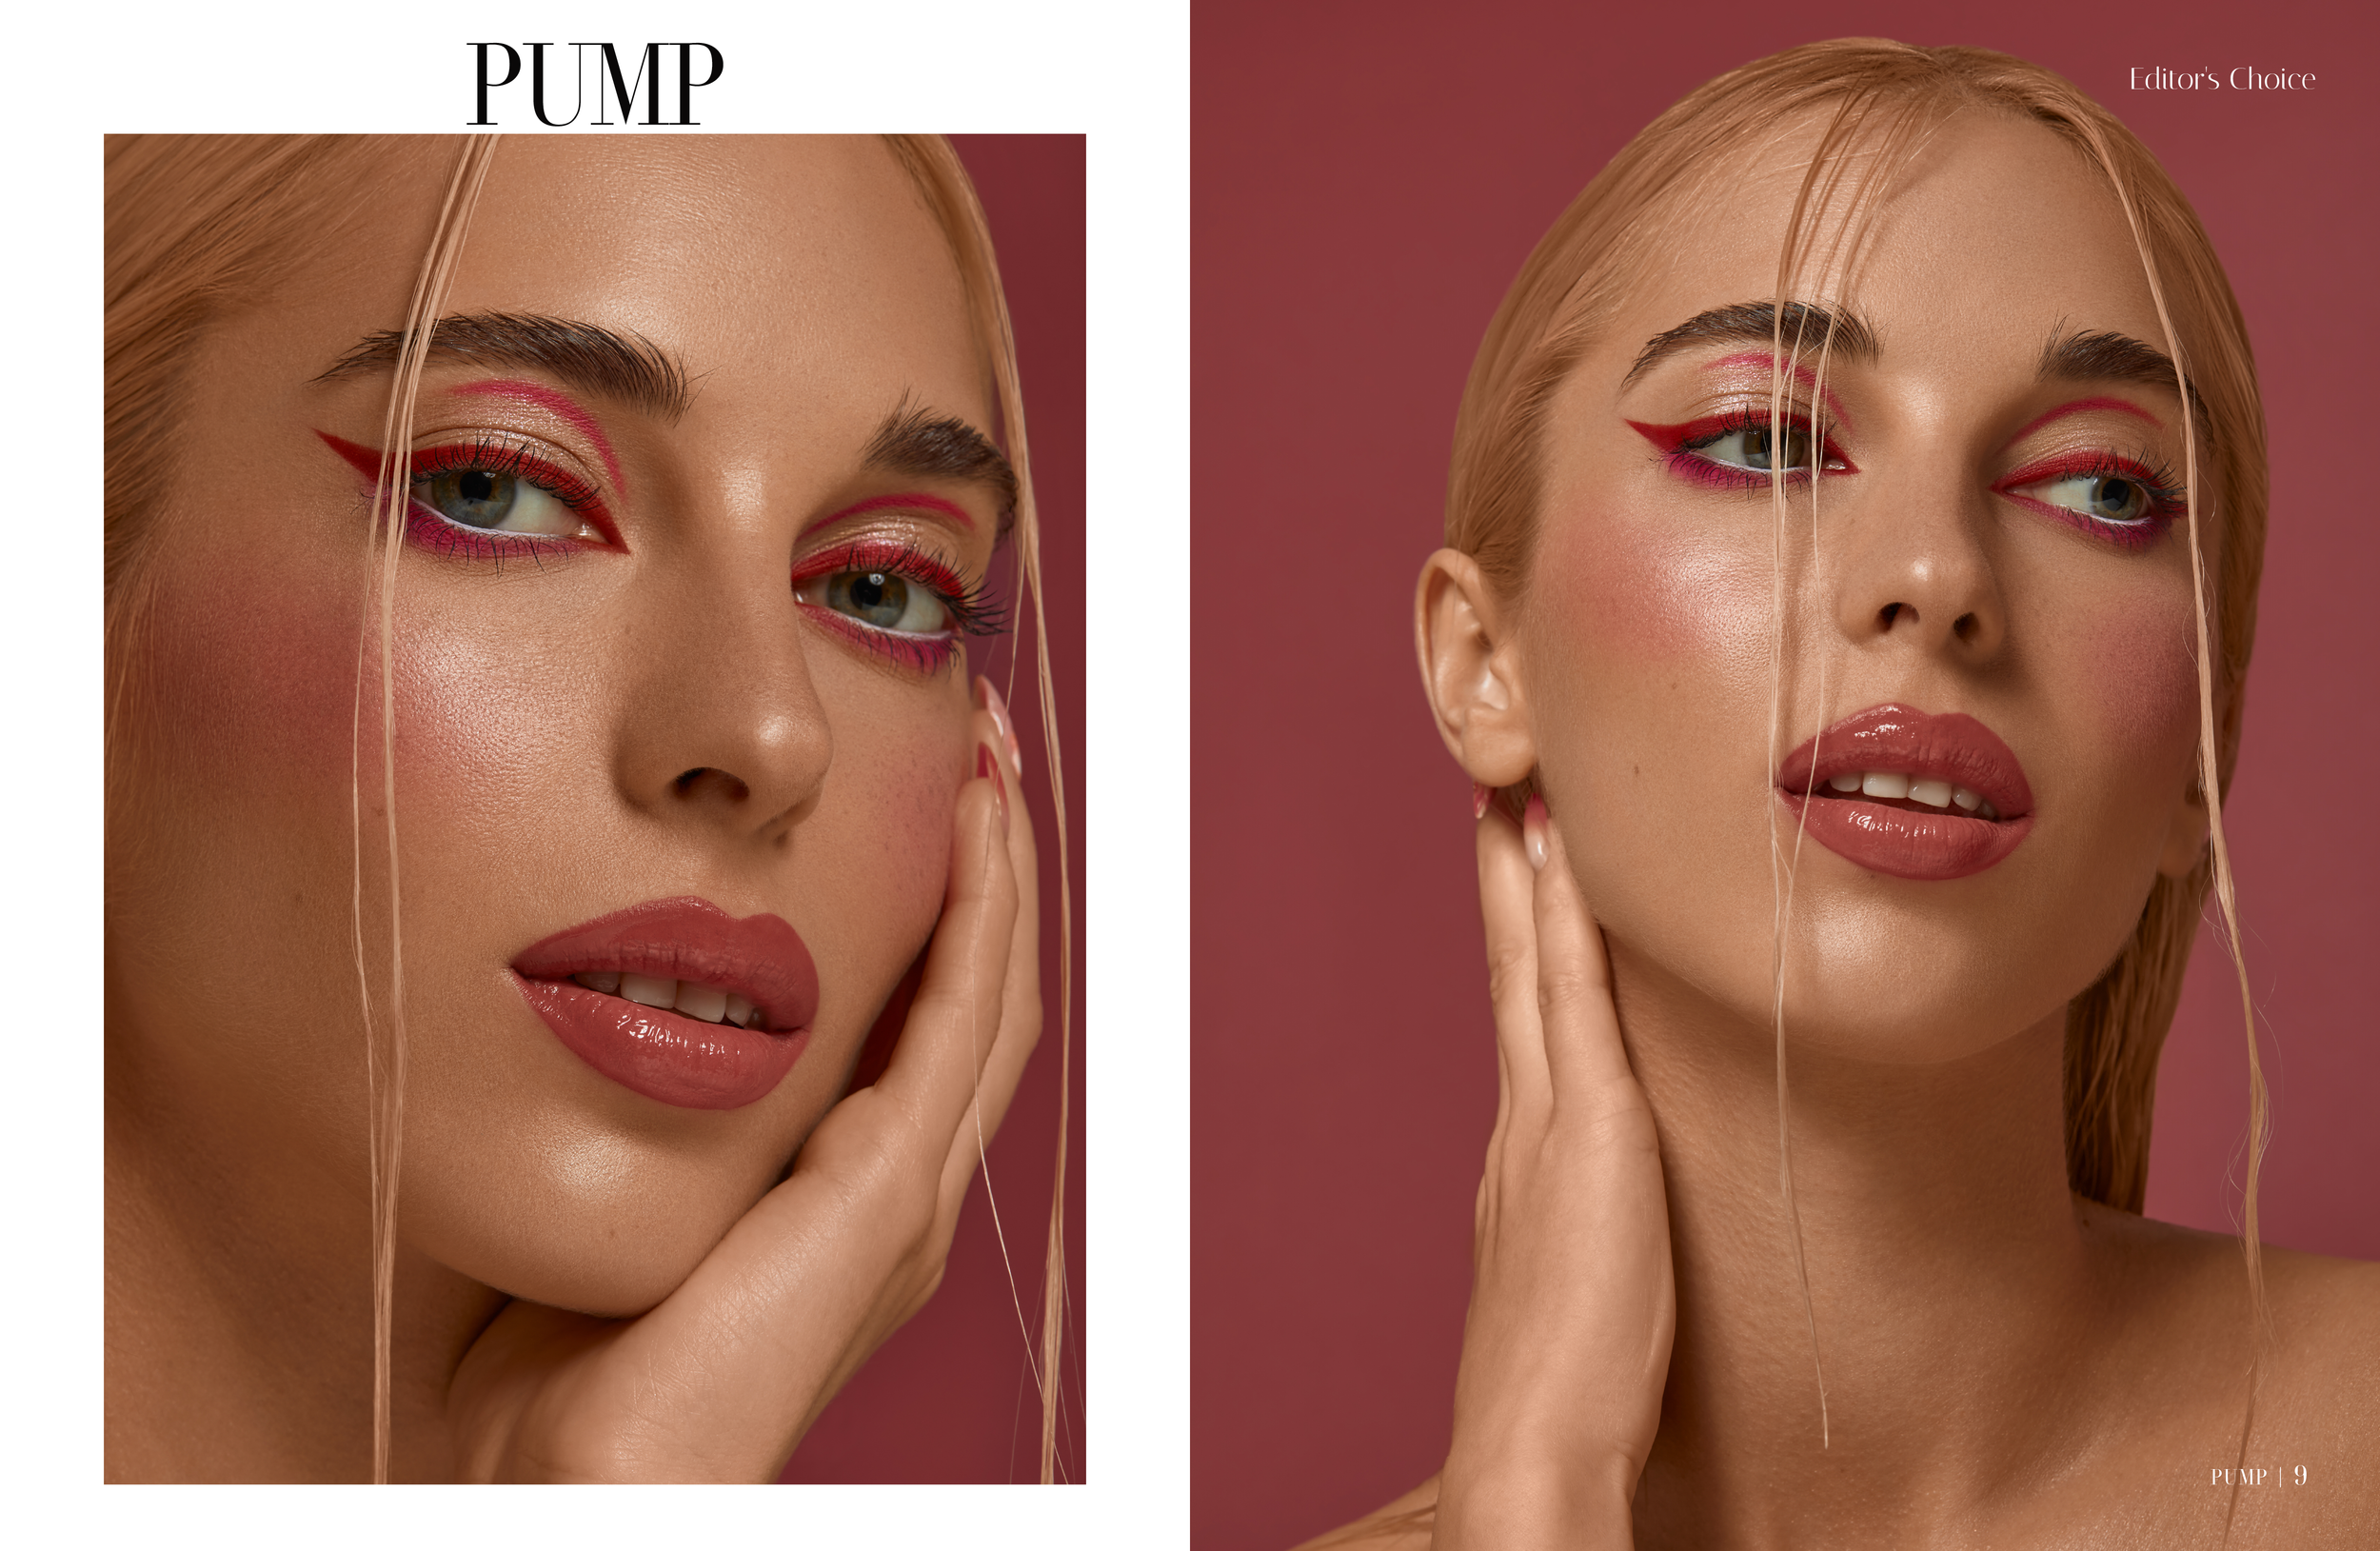 PUMP Magazine %7C The Vintage Fashion %26 Beauty Edition %7C Editor%27s Choice %7C Vol.2 %7C December 20215.png